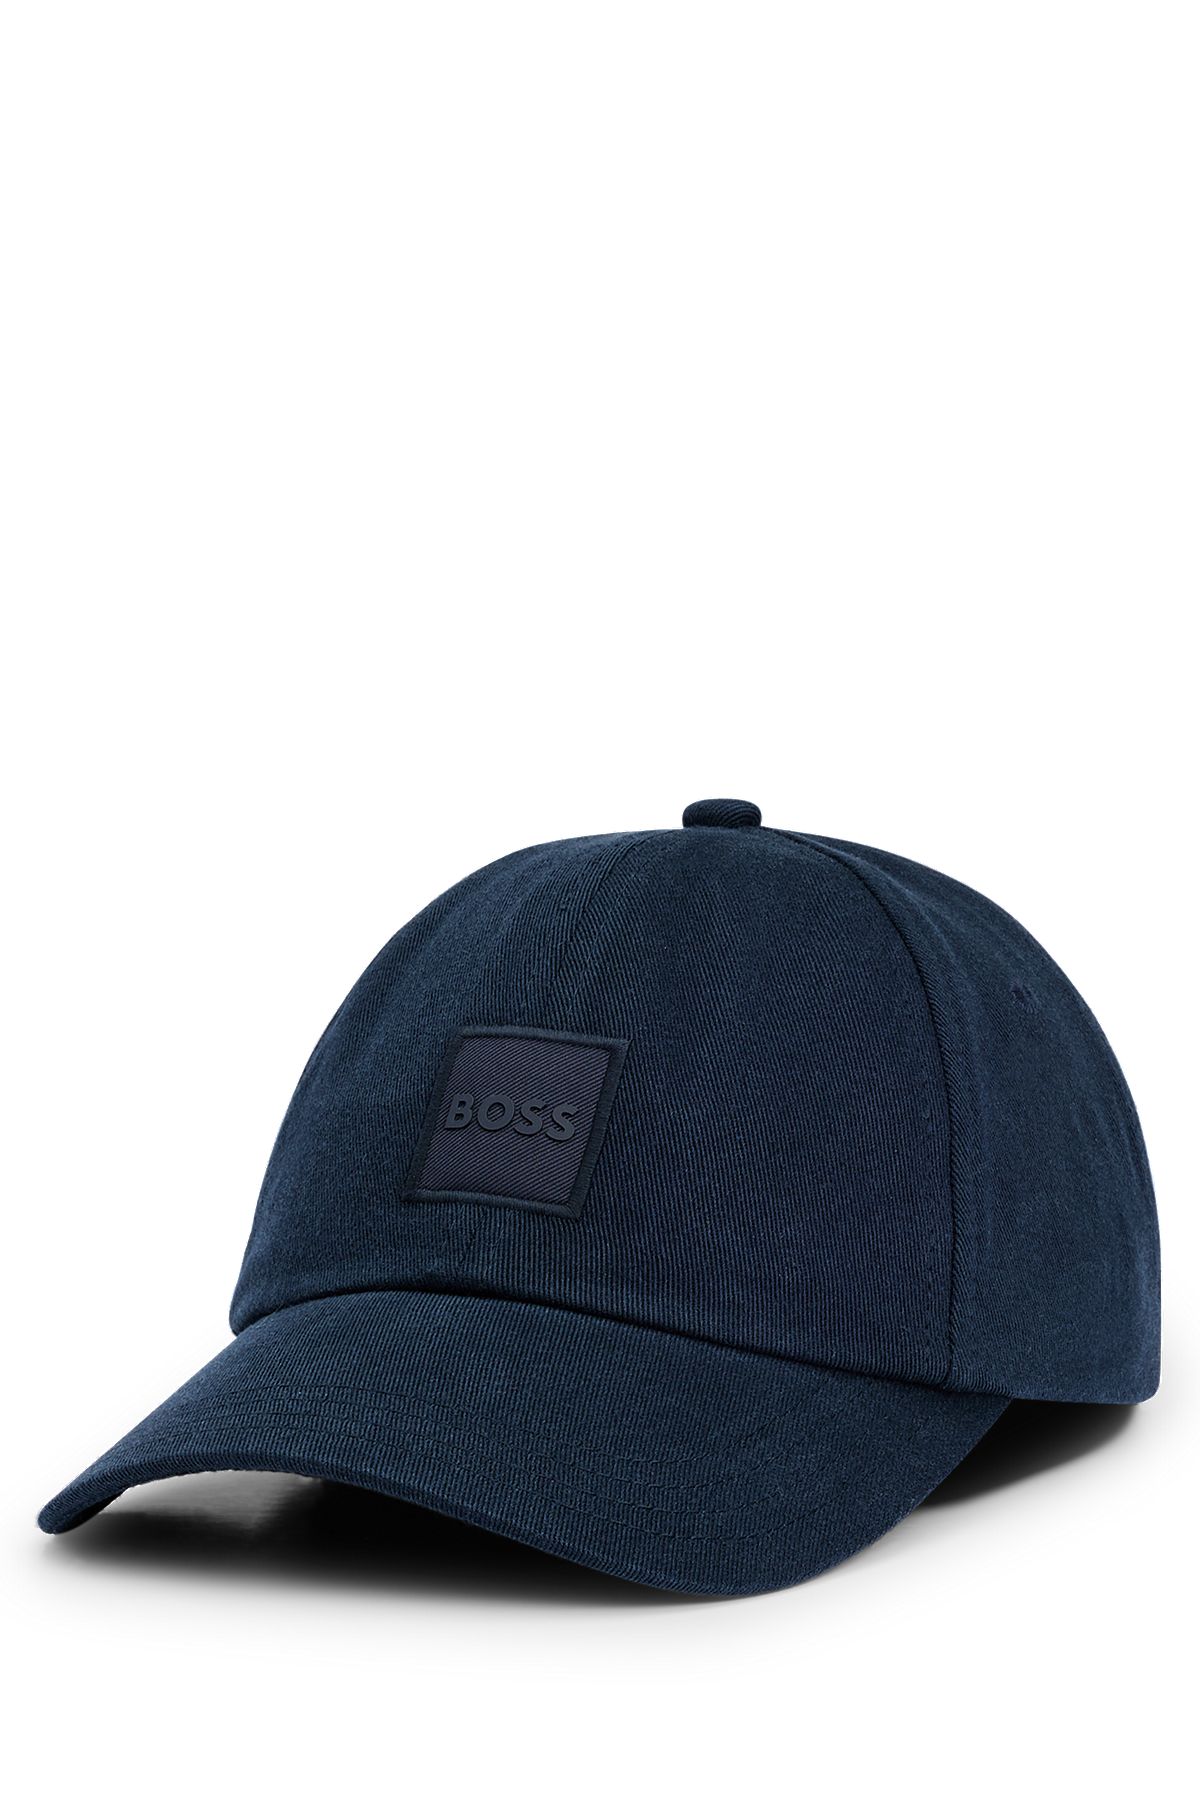 Hugo Boss hat with logo HUGO BOSS 50455699 NOVE_BB .404 - Liviana